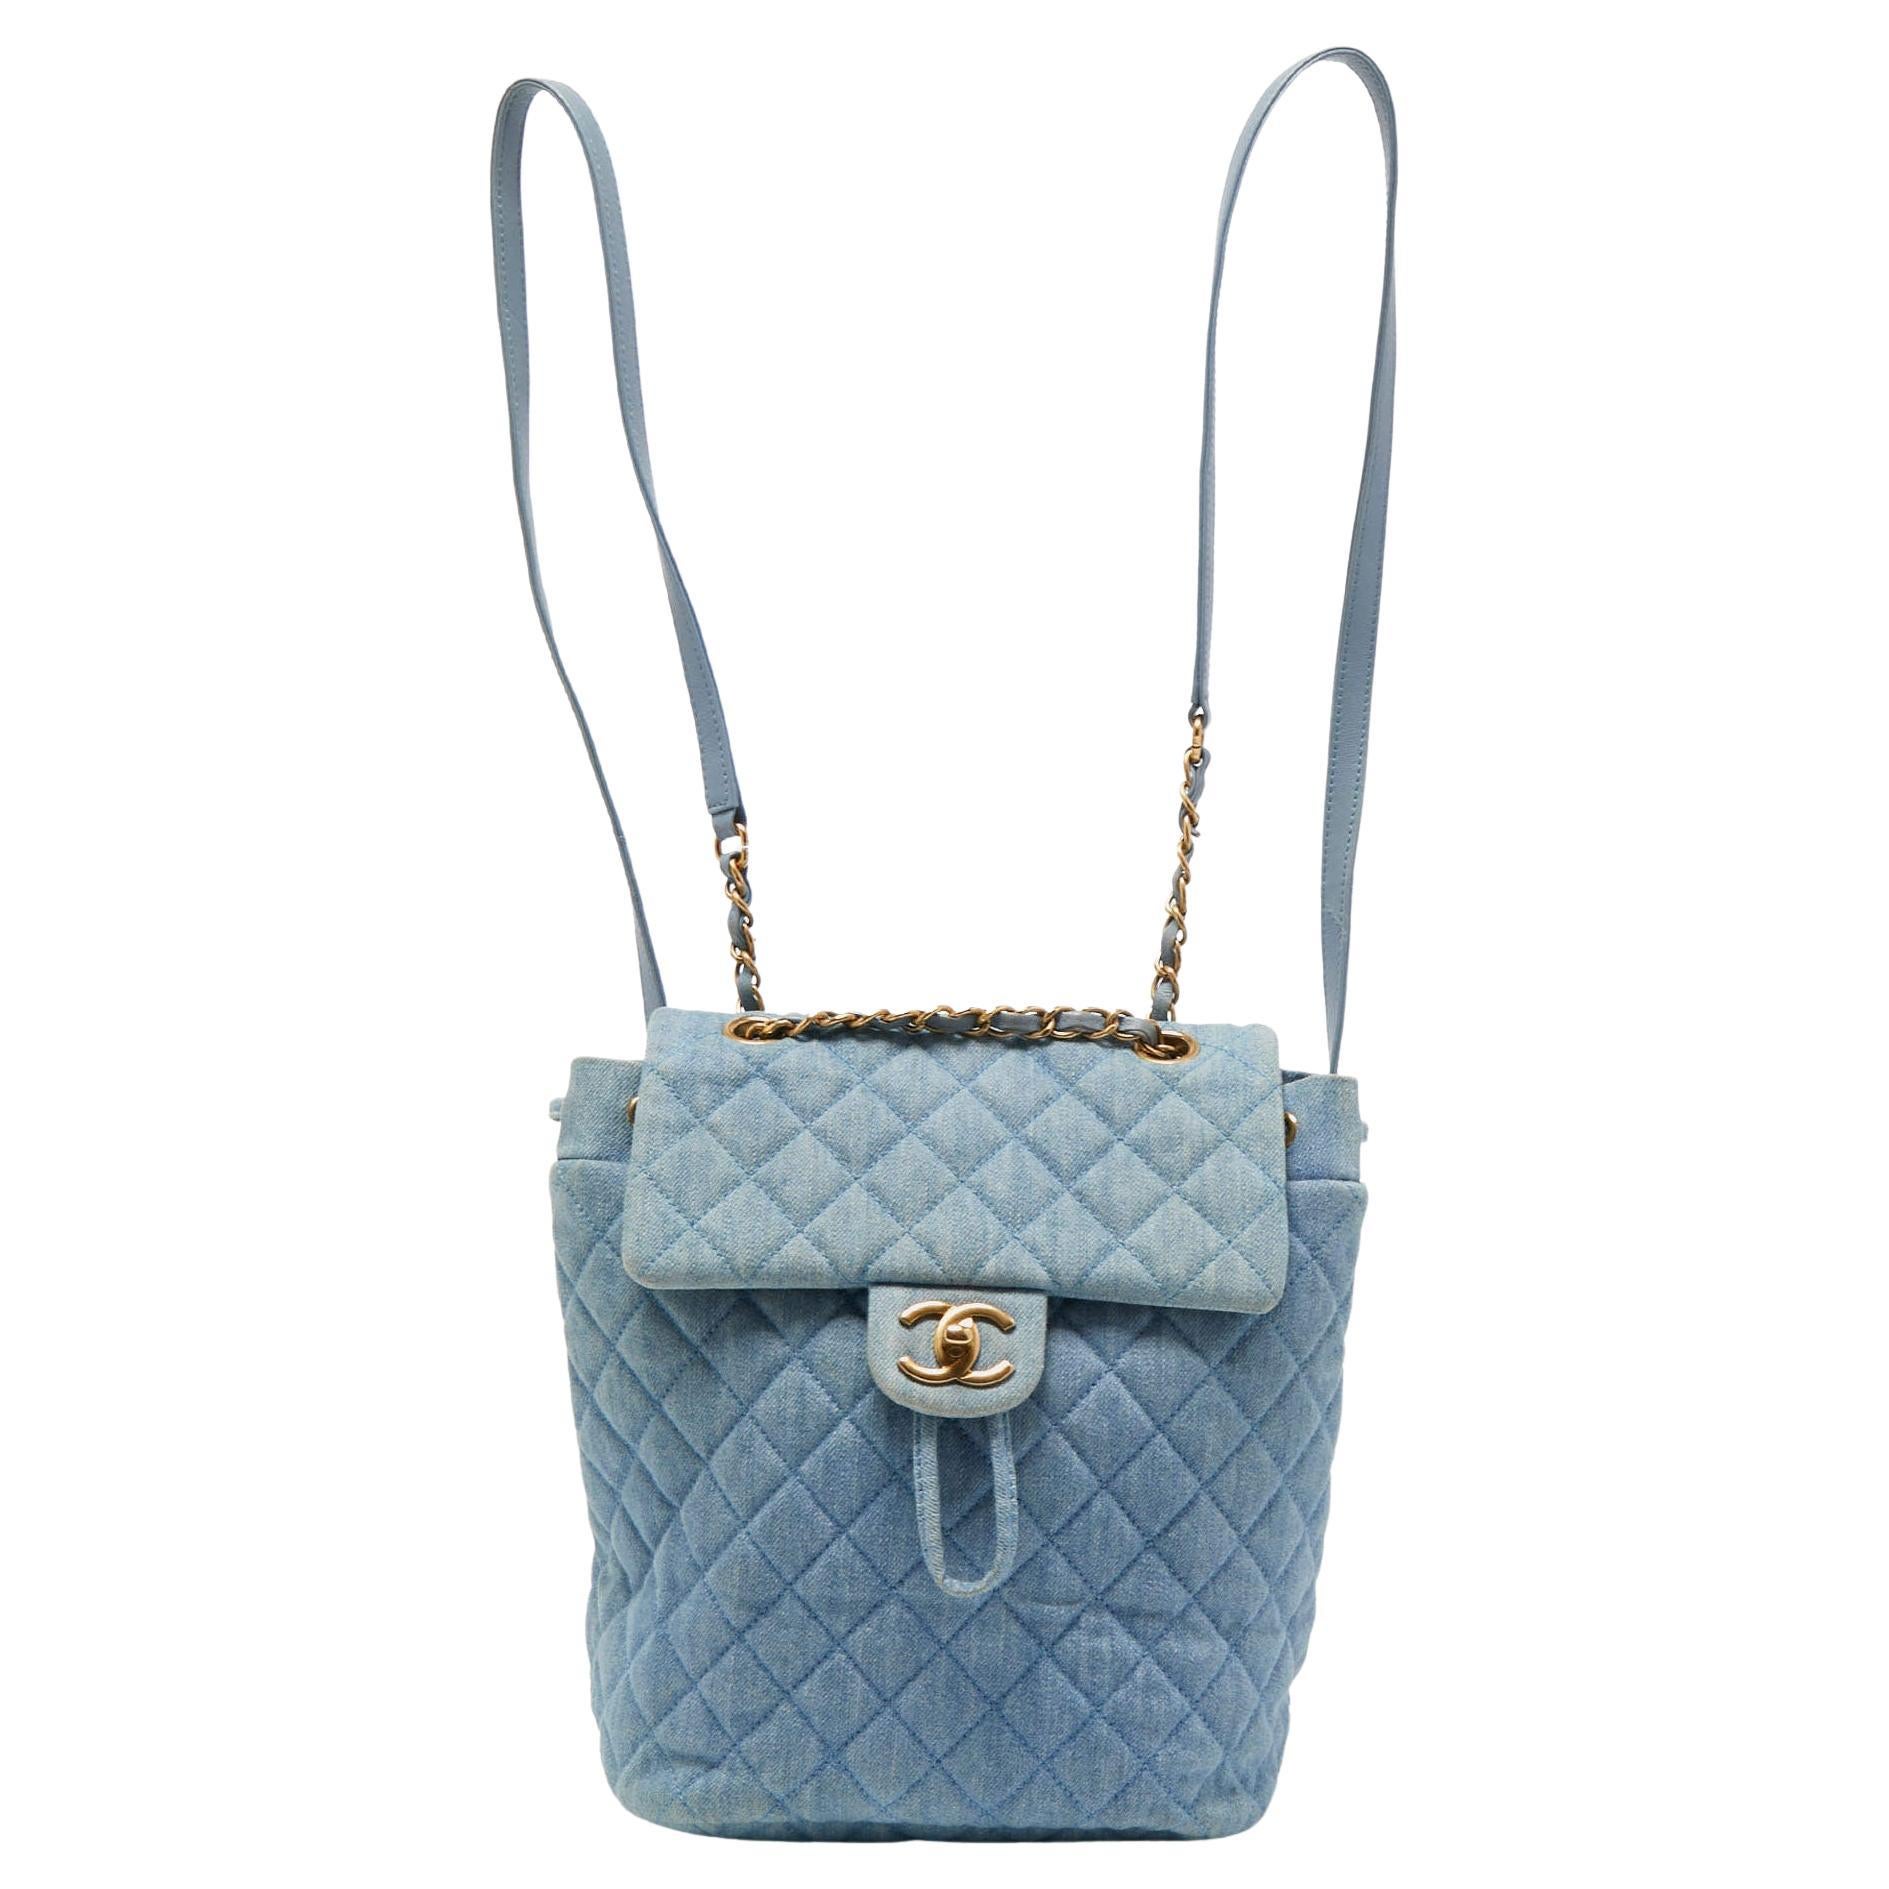 BNIB Authentic CHANEL Blue Denim Small Single Flap Bag